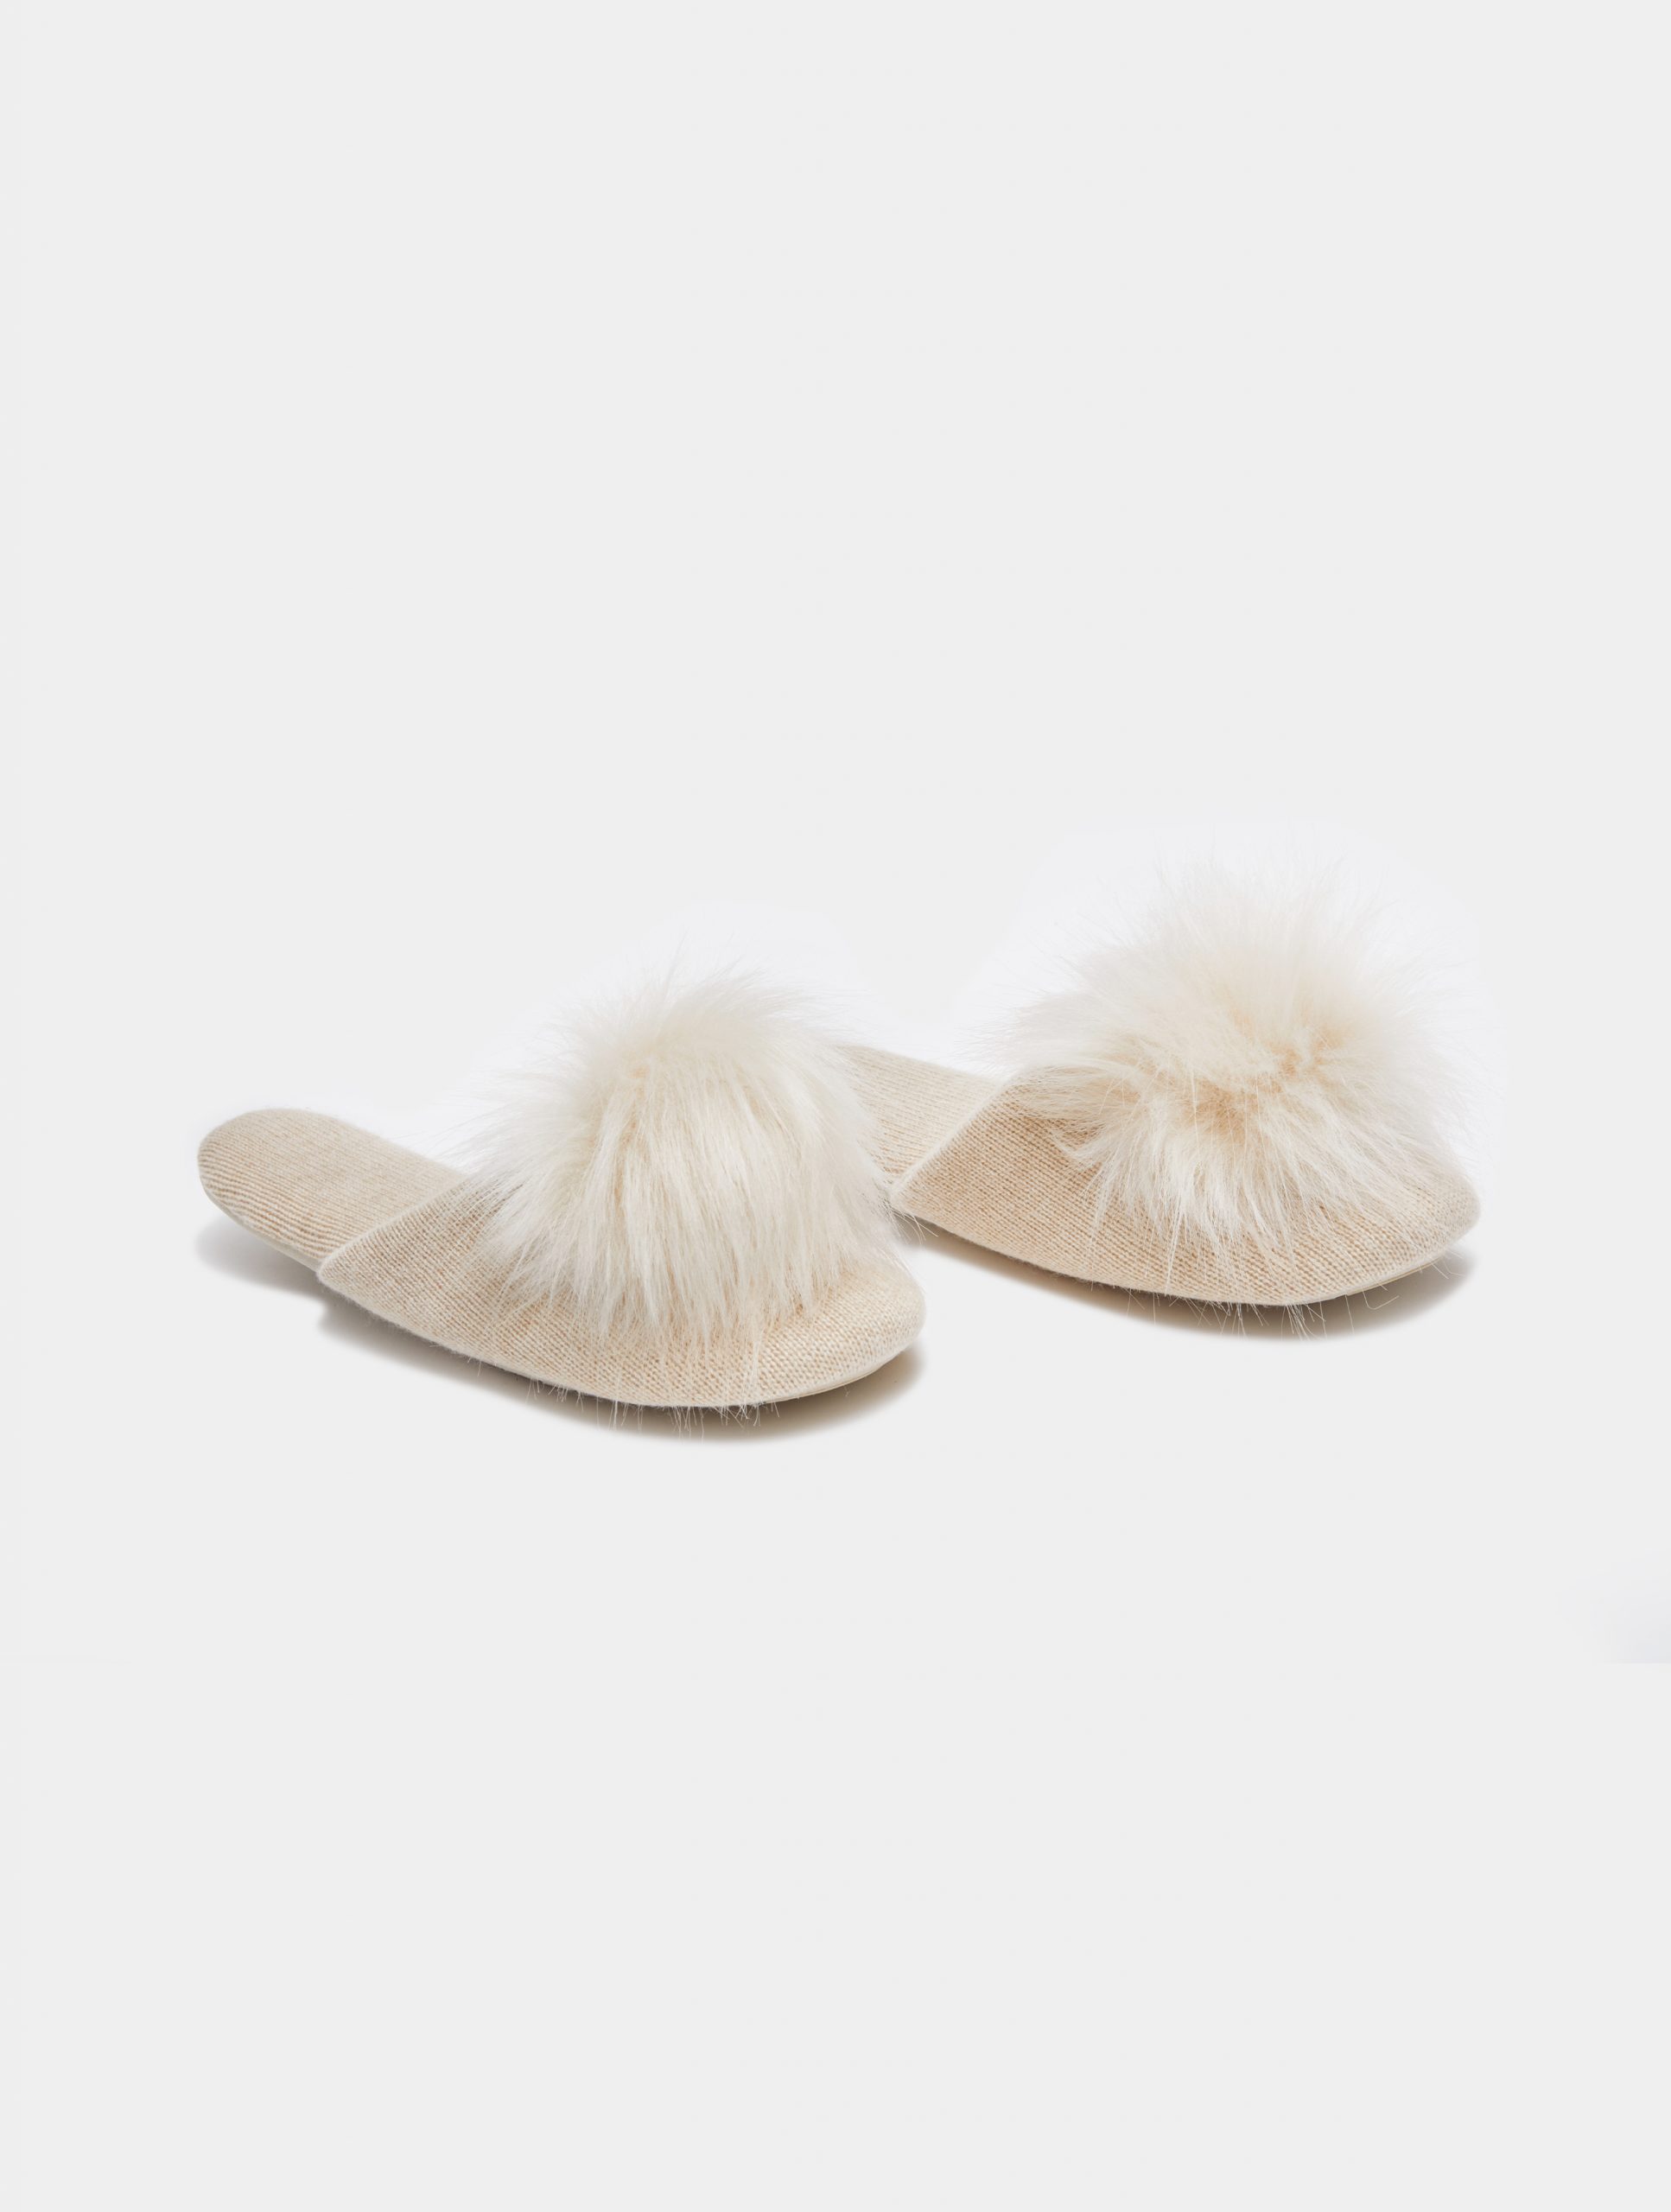 12 Wholesale Women's Fluffy Faux Fur Slippers Comfy Open Toe Two